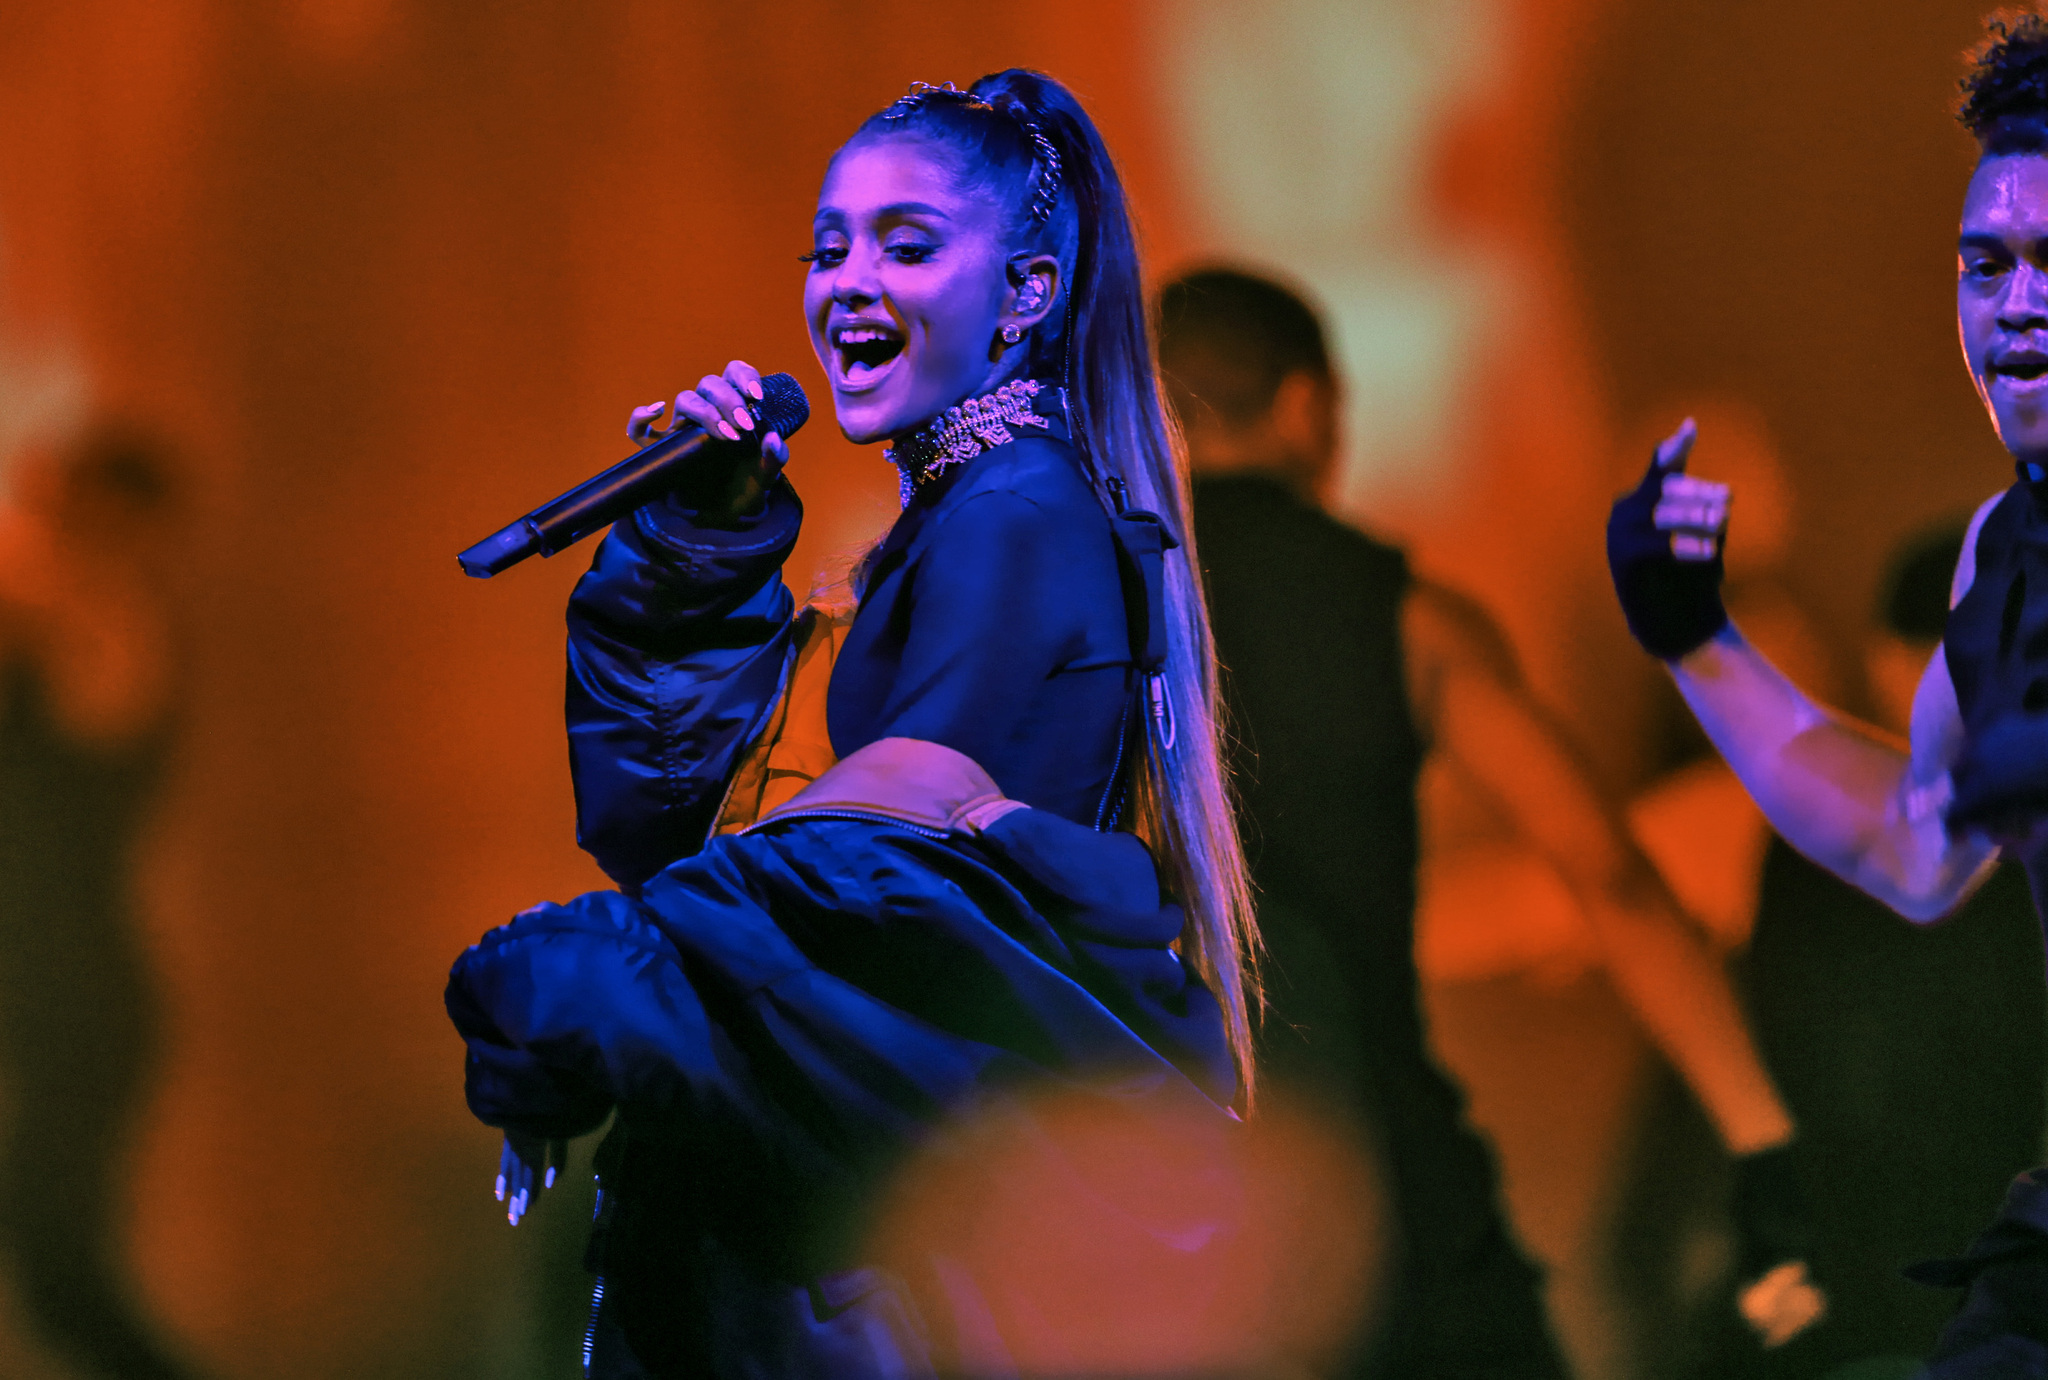 Ariana Grande Telenor Arena Ariana Grande Tour 2019 2020